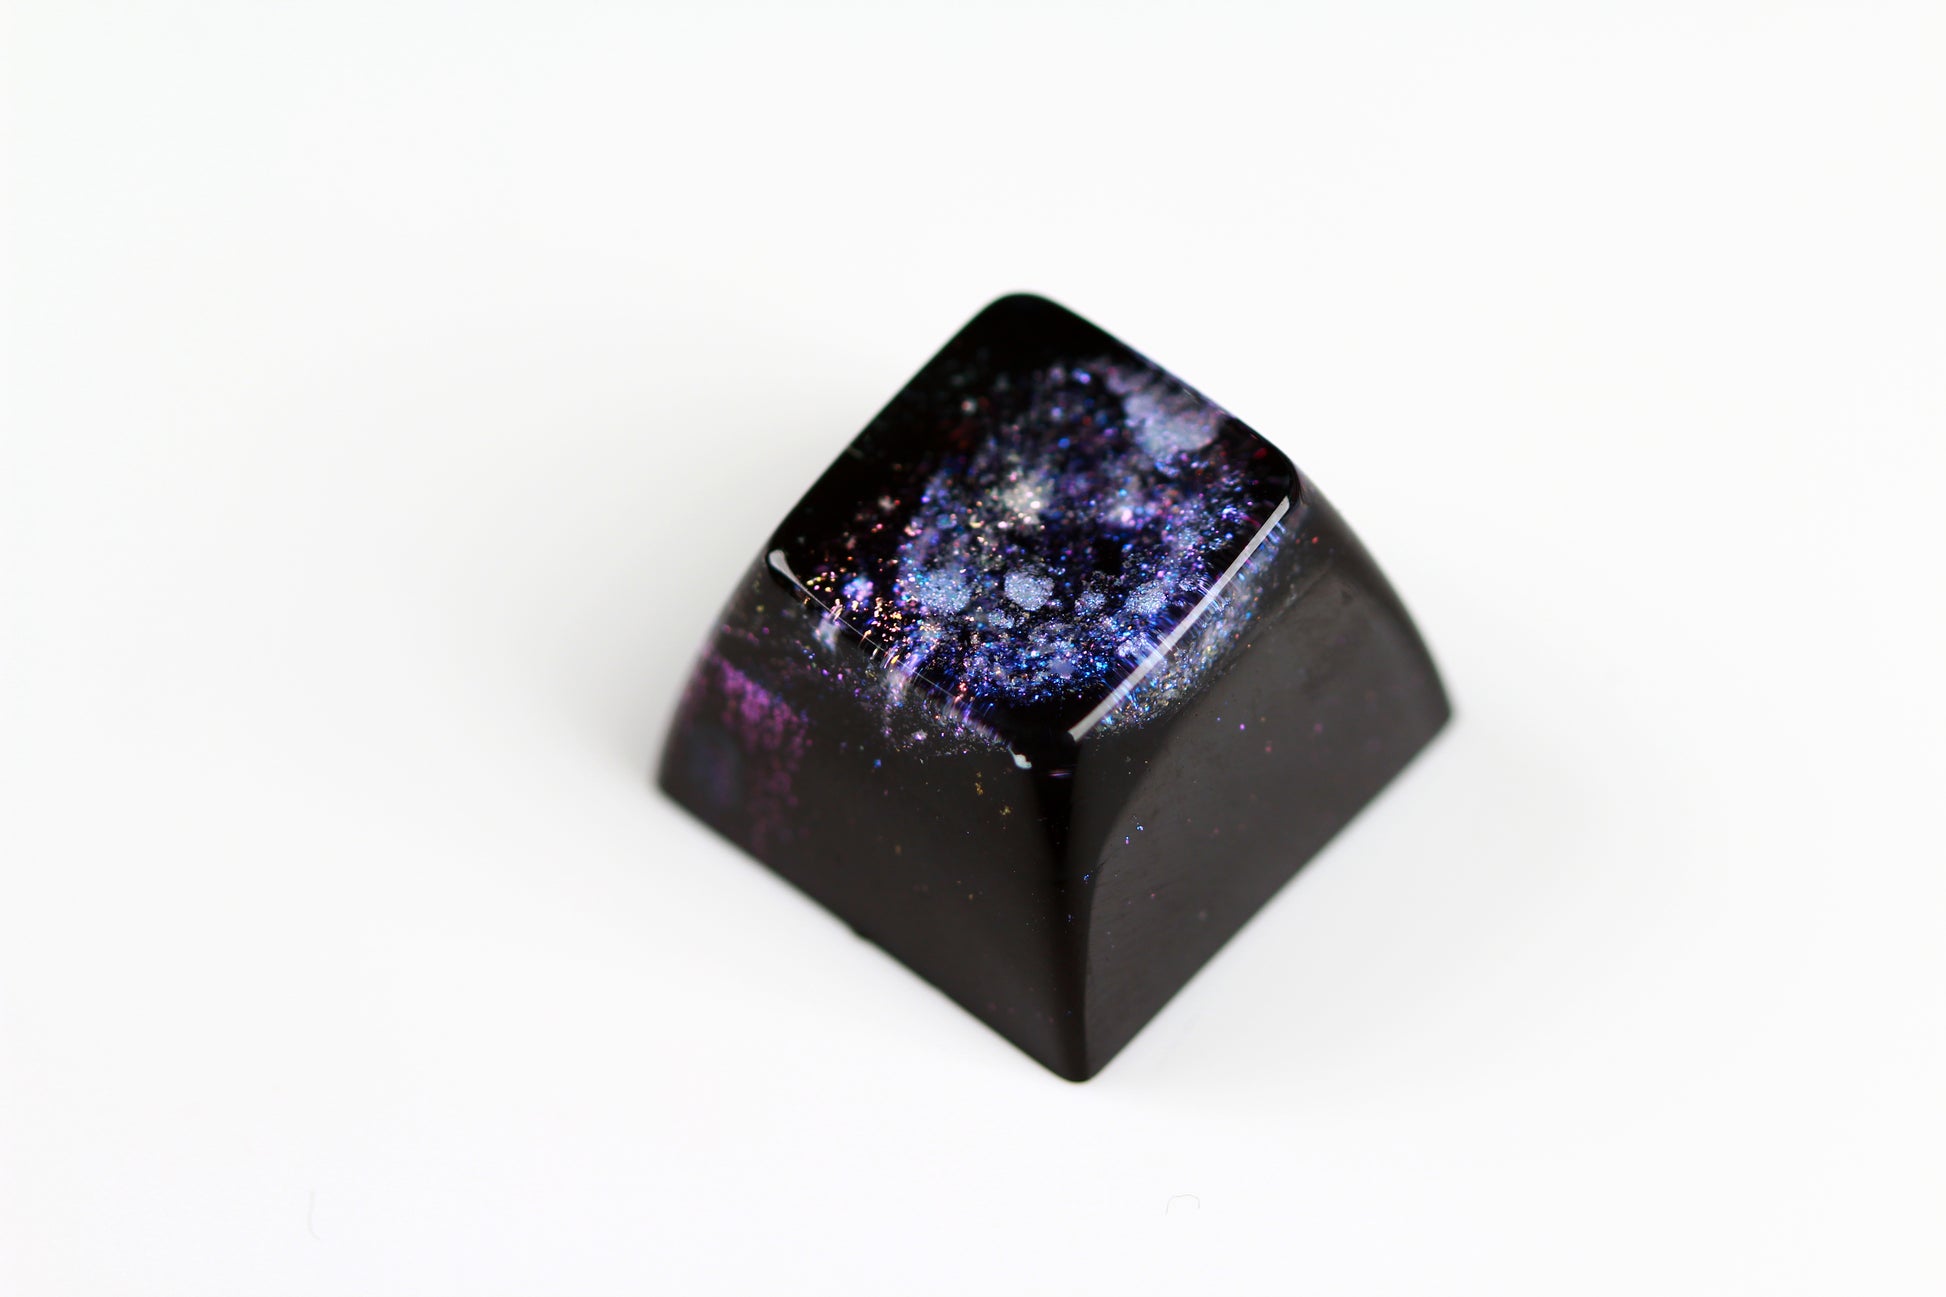 Gimpy SA Row 2/4 - Deep Field Opal Nebula 6 - PrimeCaps Keycap - Blank and Sculpted Artisan Keycaps for cherry MX mechanical keyboards 